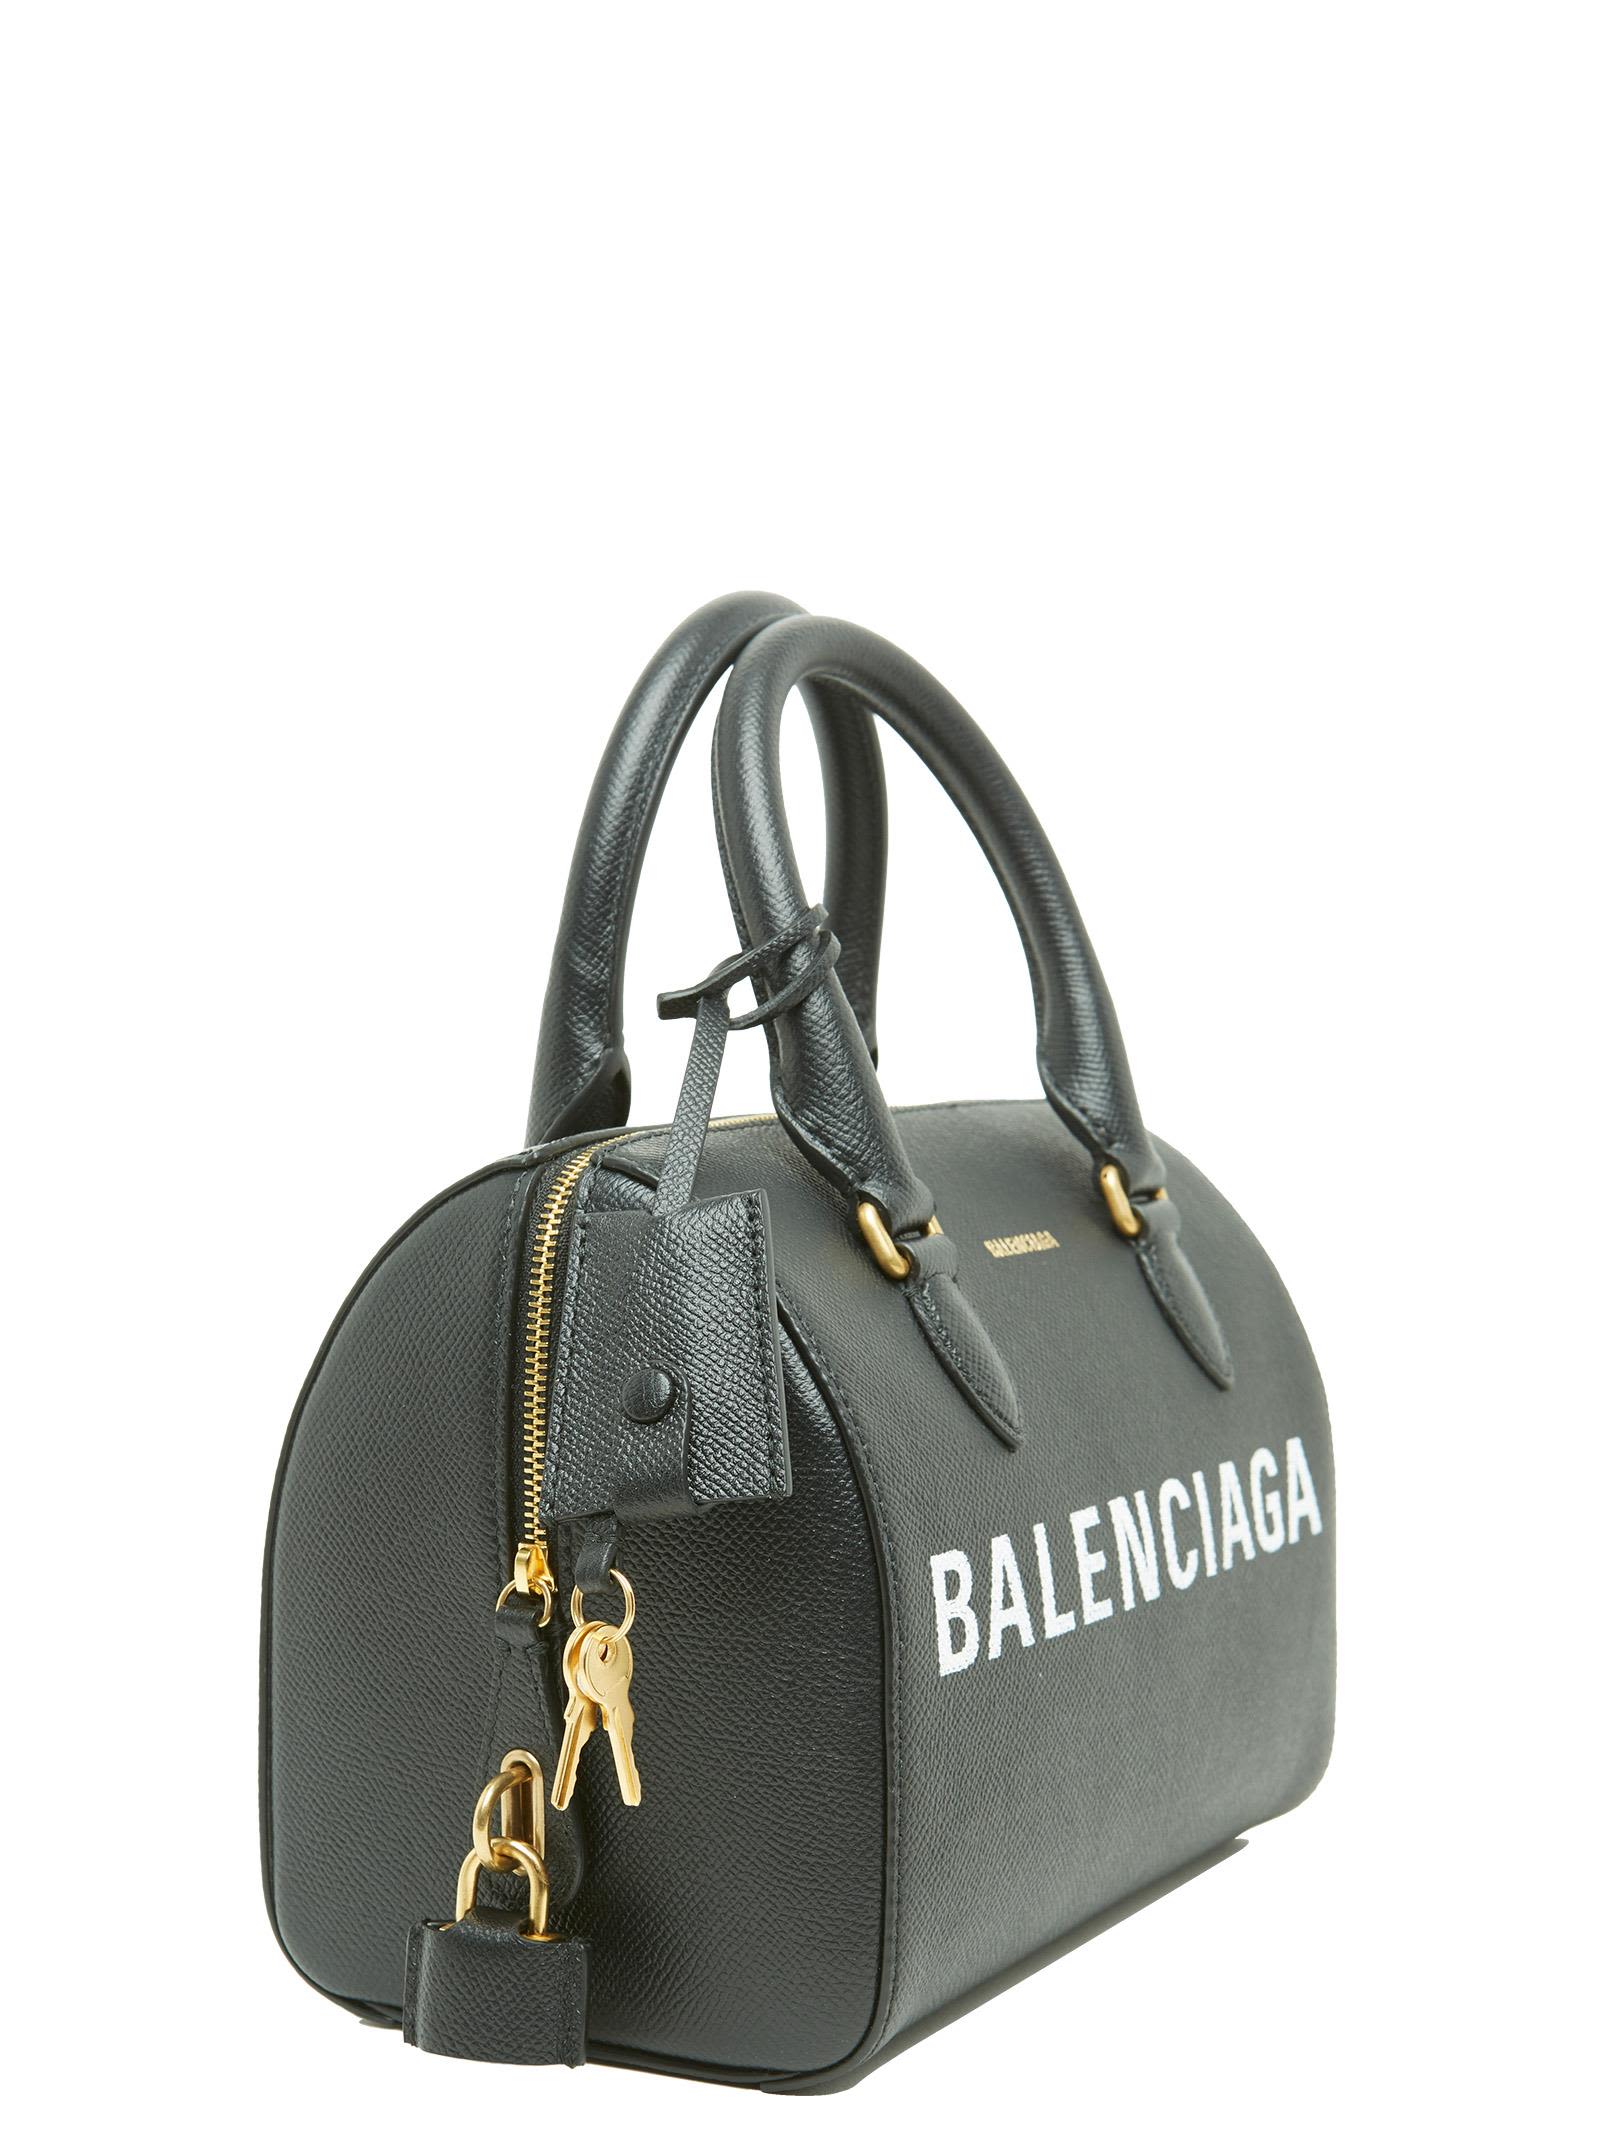 italist | Best price in the market for Balenciaga Balenciaga Bag - Black - 10622843 | italist